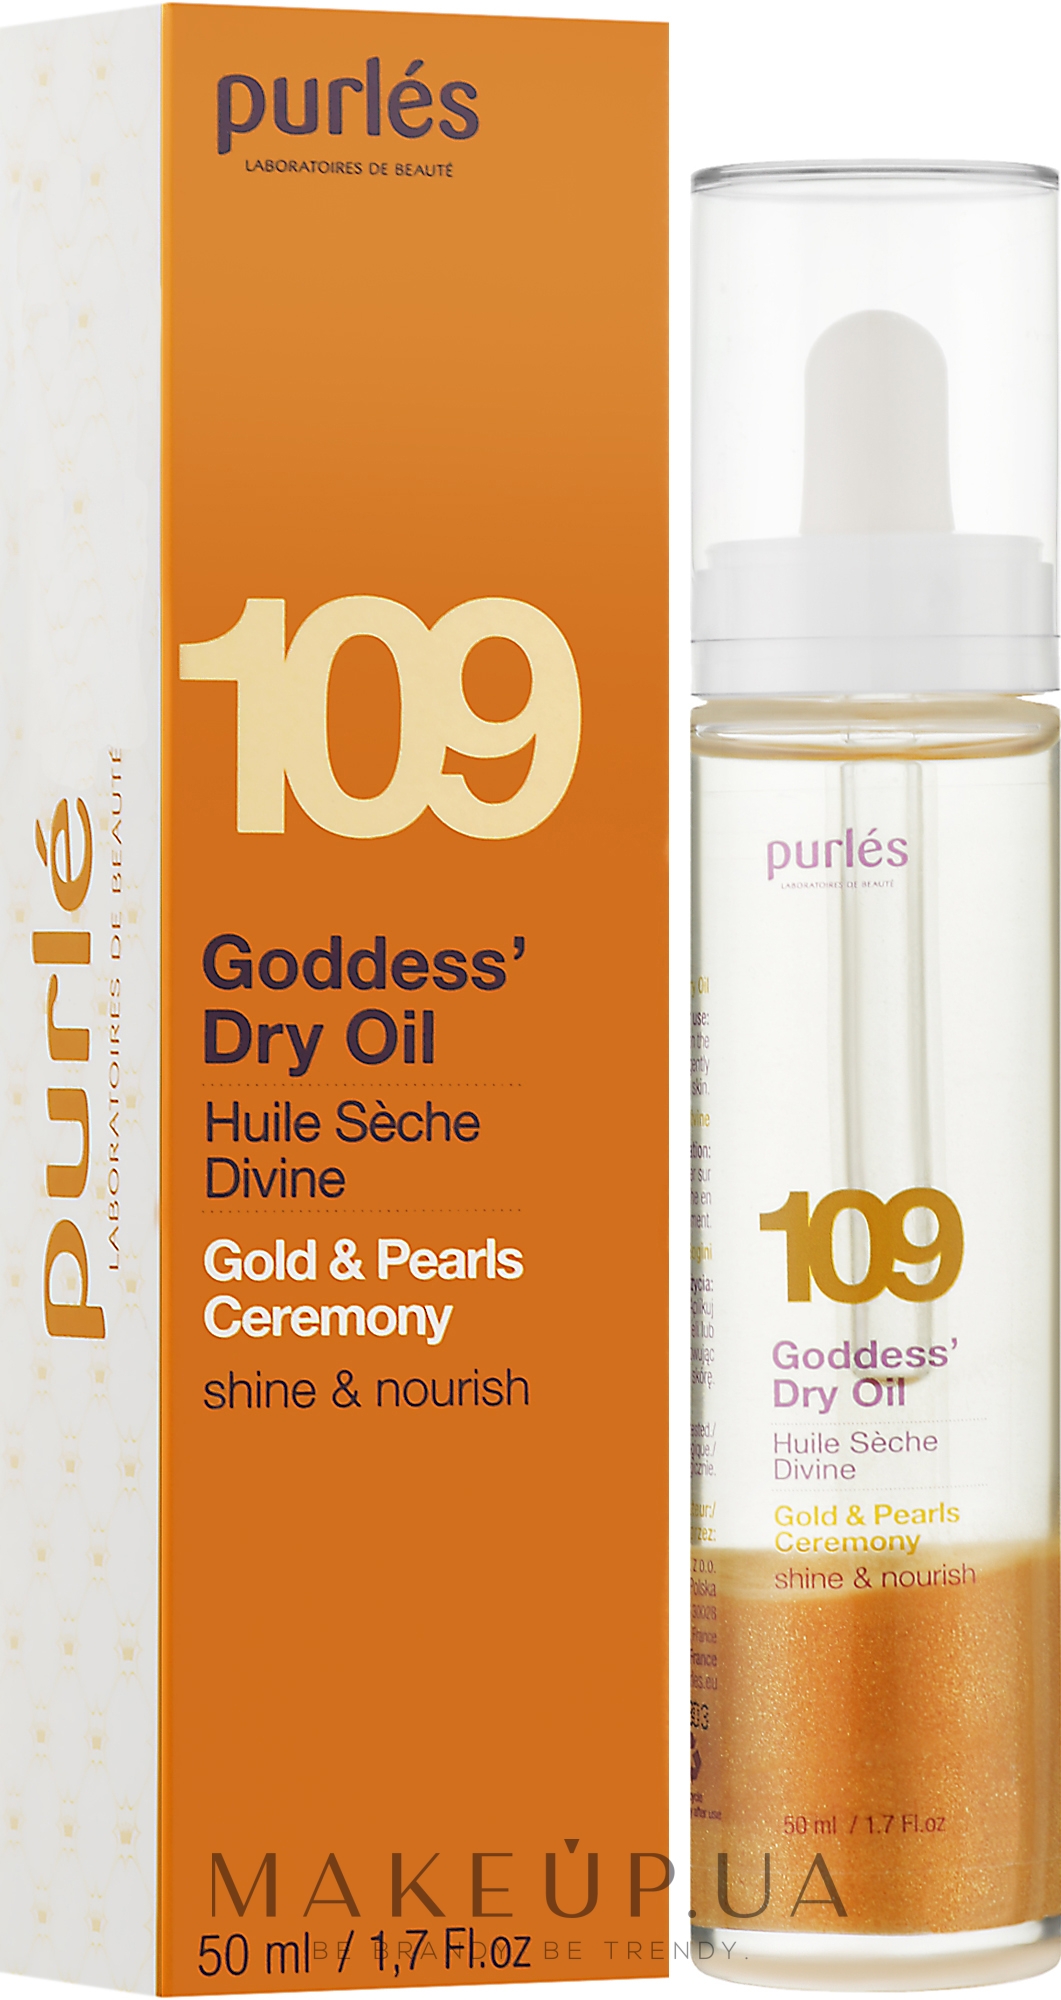 Суха олія для обличчя й тіла - Purles Gold & Pearls Ceremony Goddes Dry Oil 109 — фото 50ml